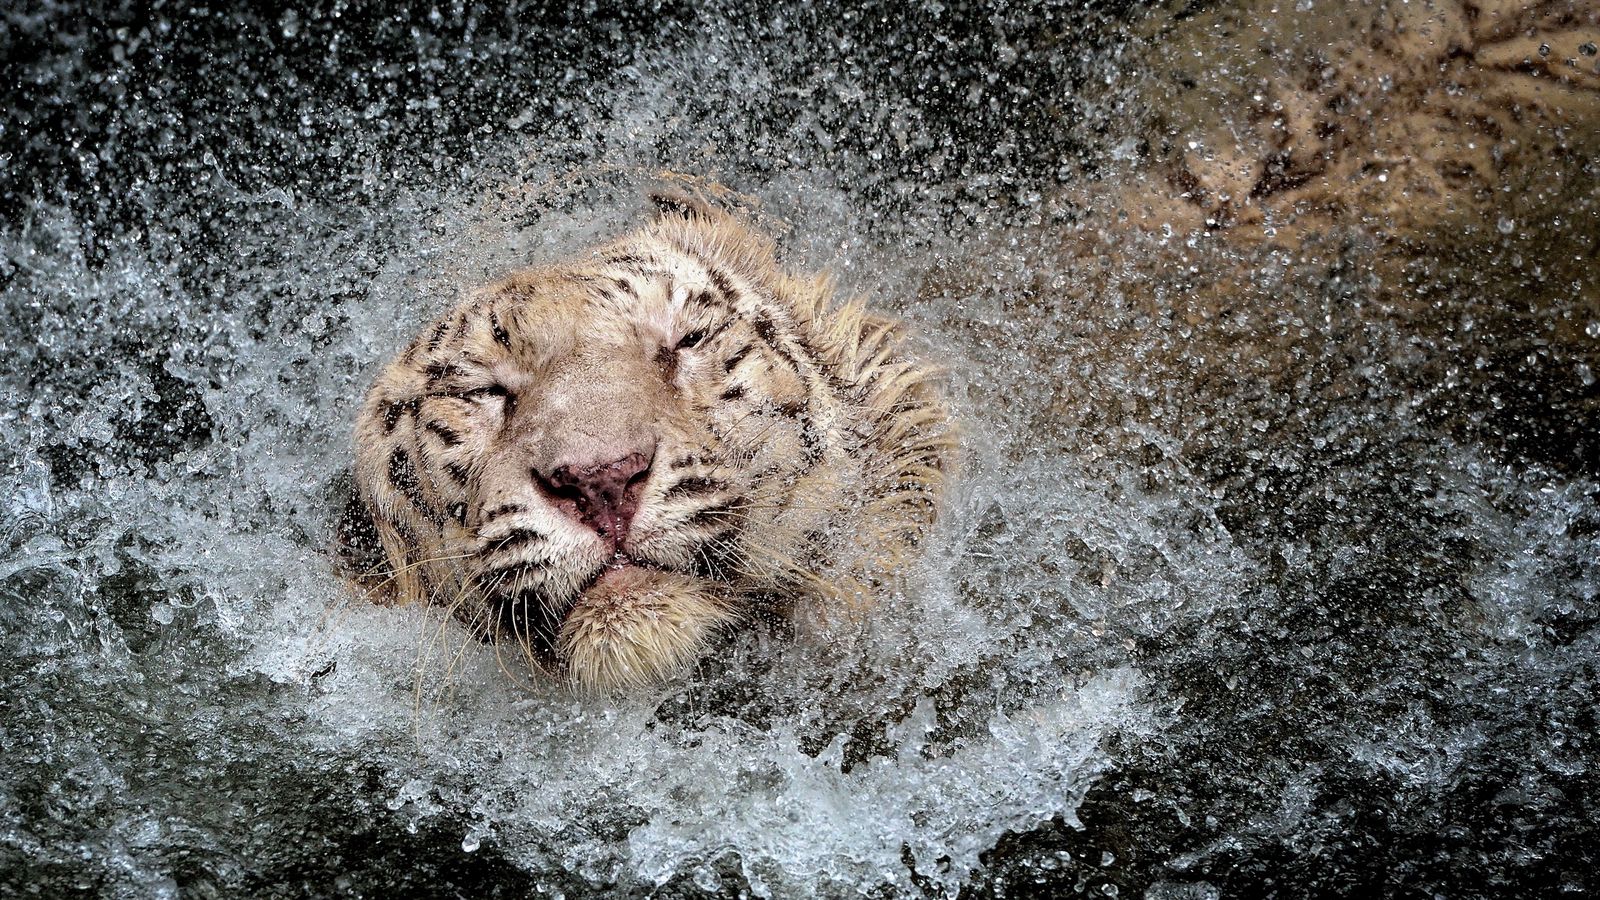 Download wallpaper 1600x900 tiger, splashing, swim widescreen 16:9 hd ...